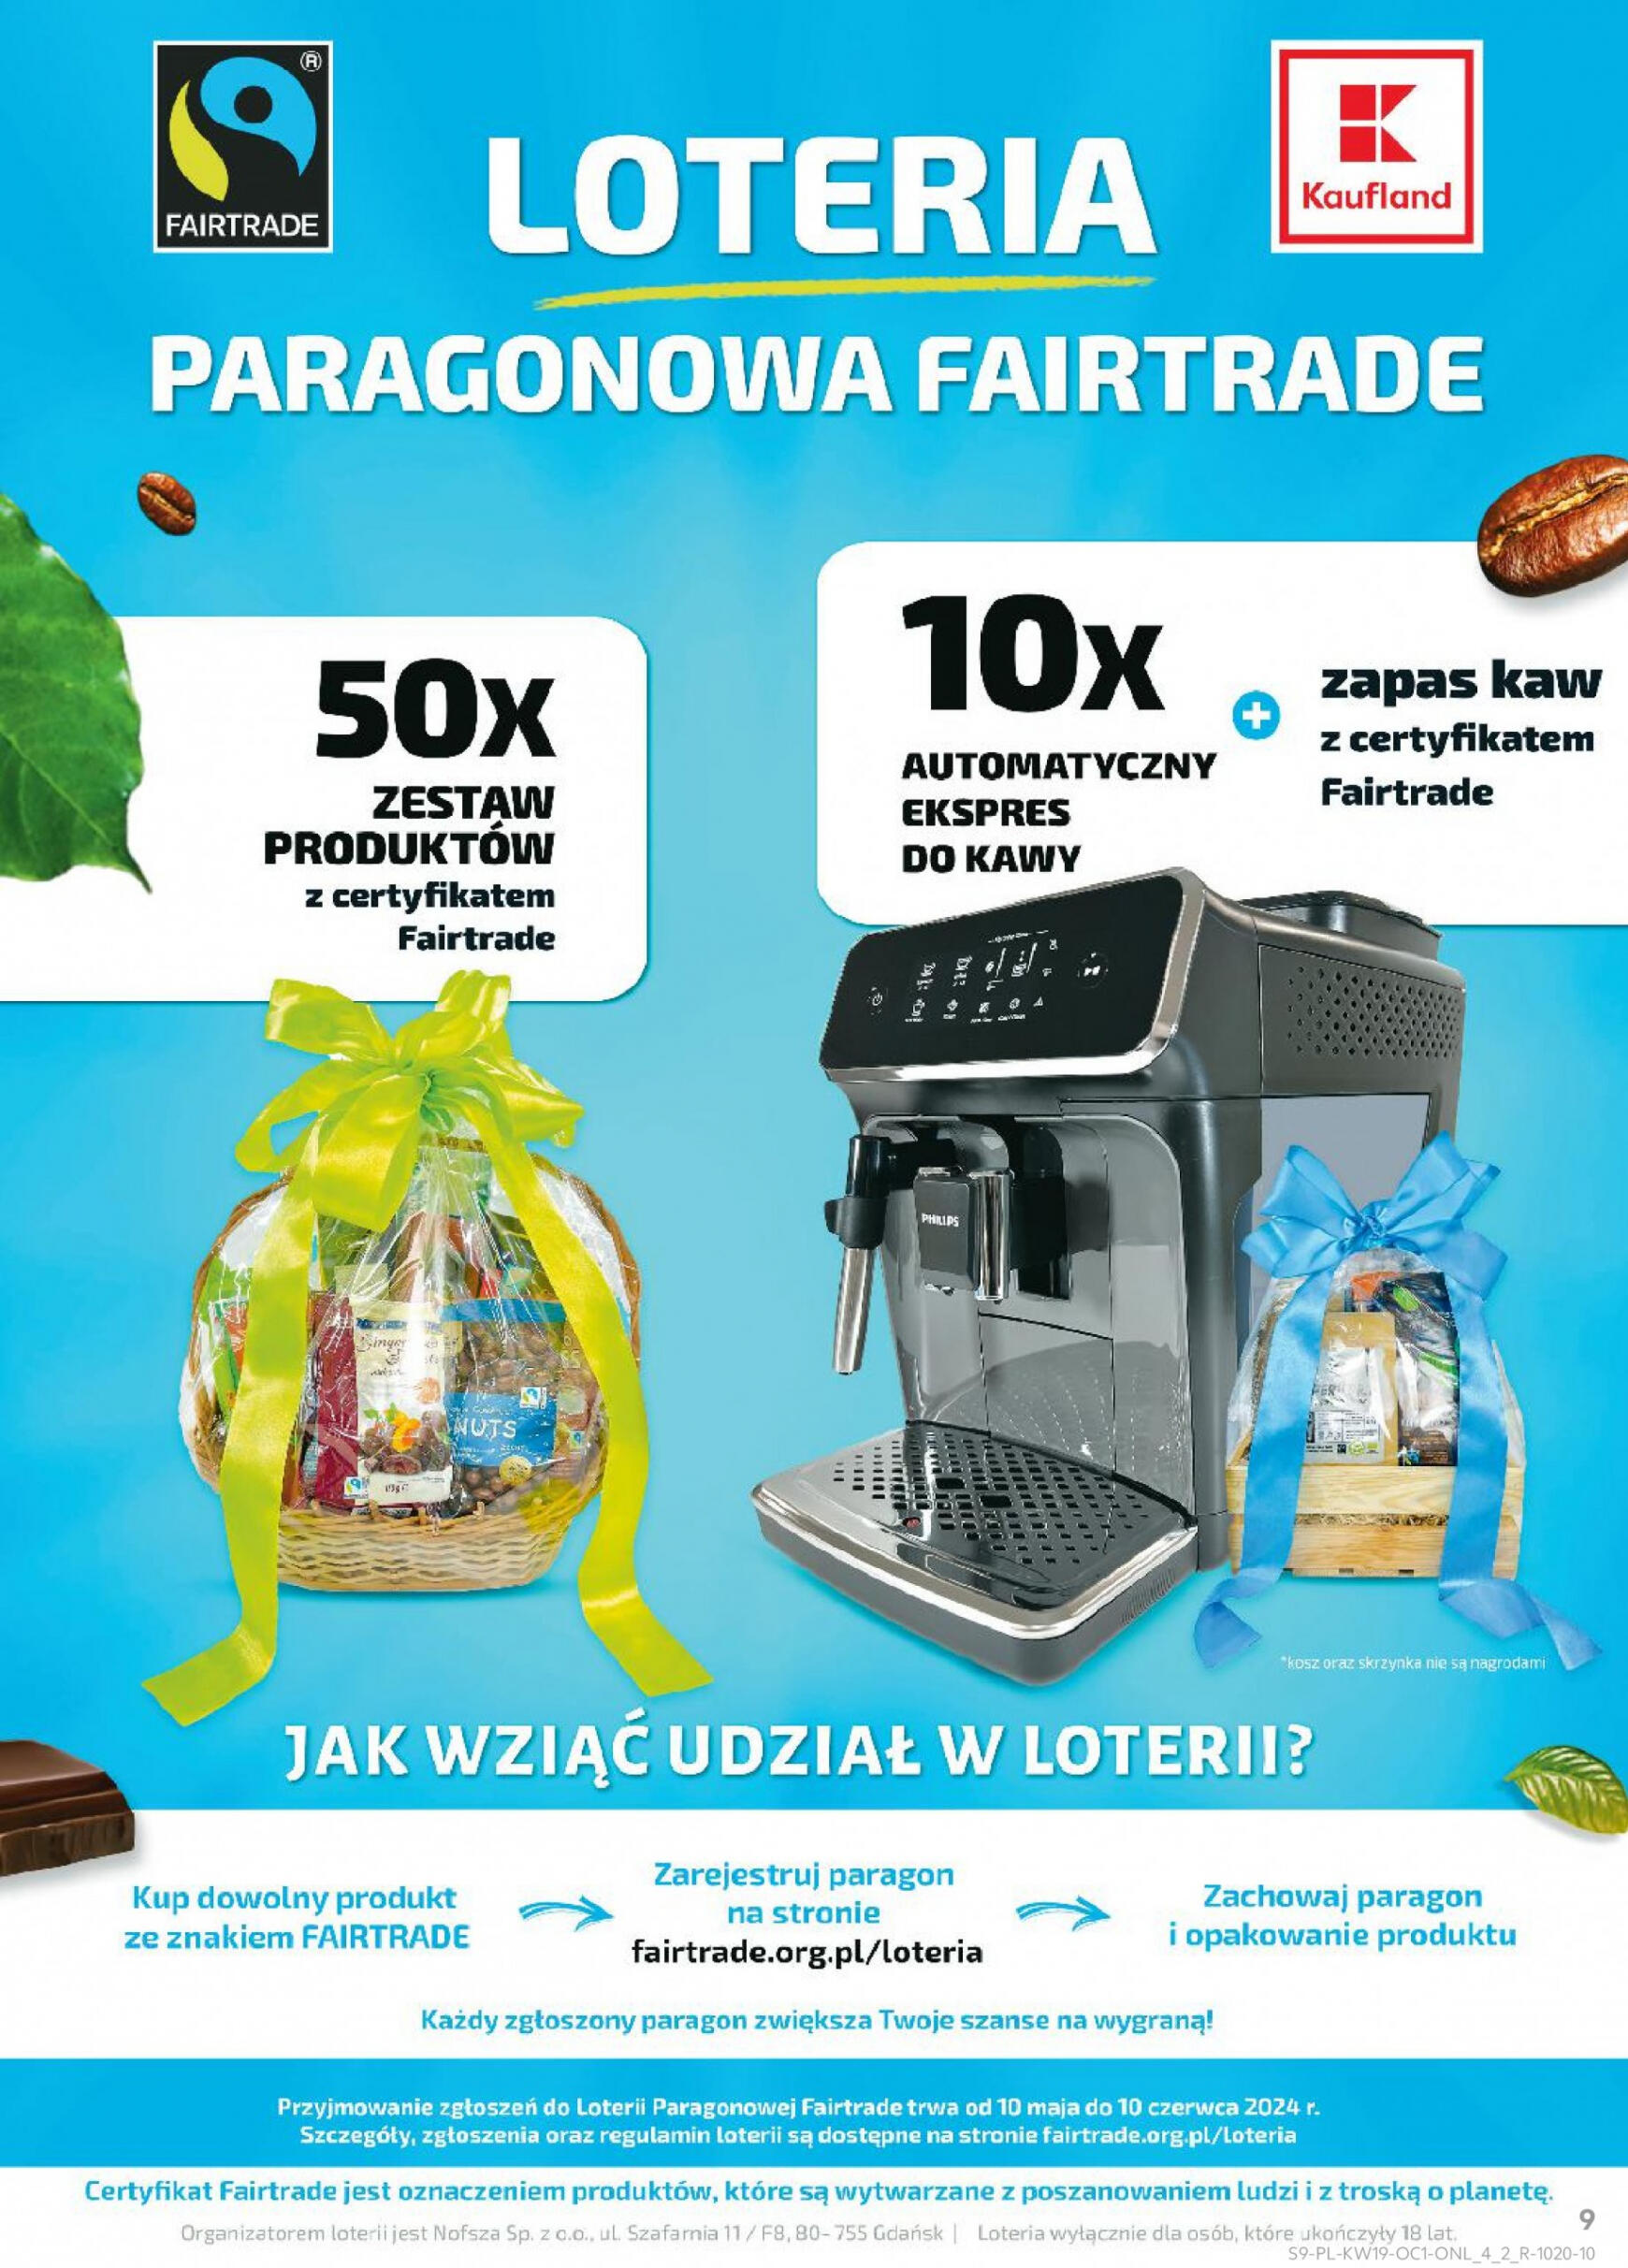 kaufland - Kaufland - Mesiąc Fairtrade gazetka aktualna ważna od 09.05. - 22.05. - page: 9